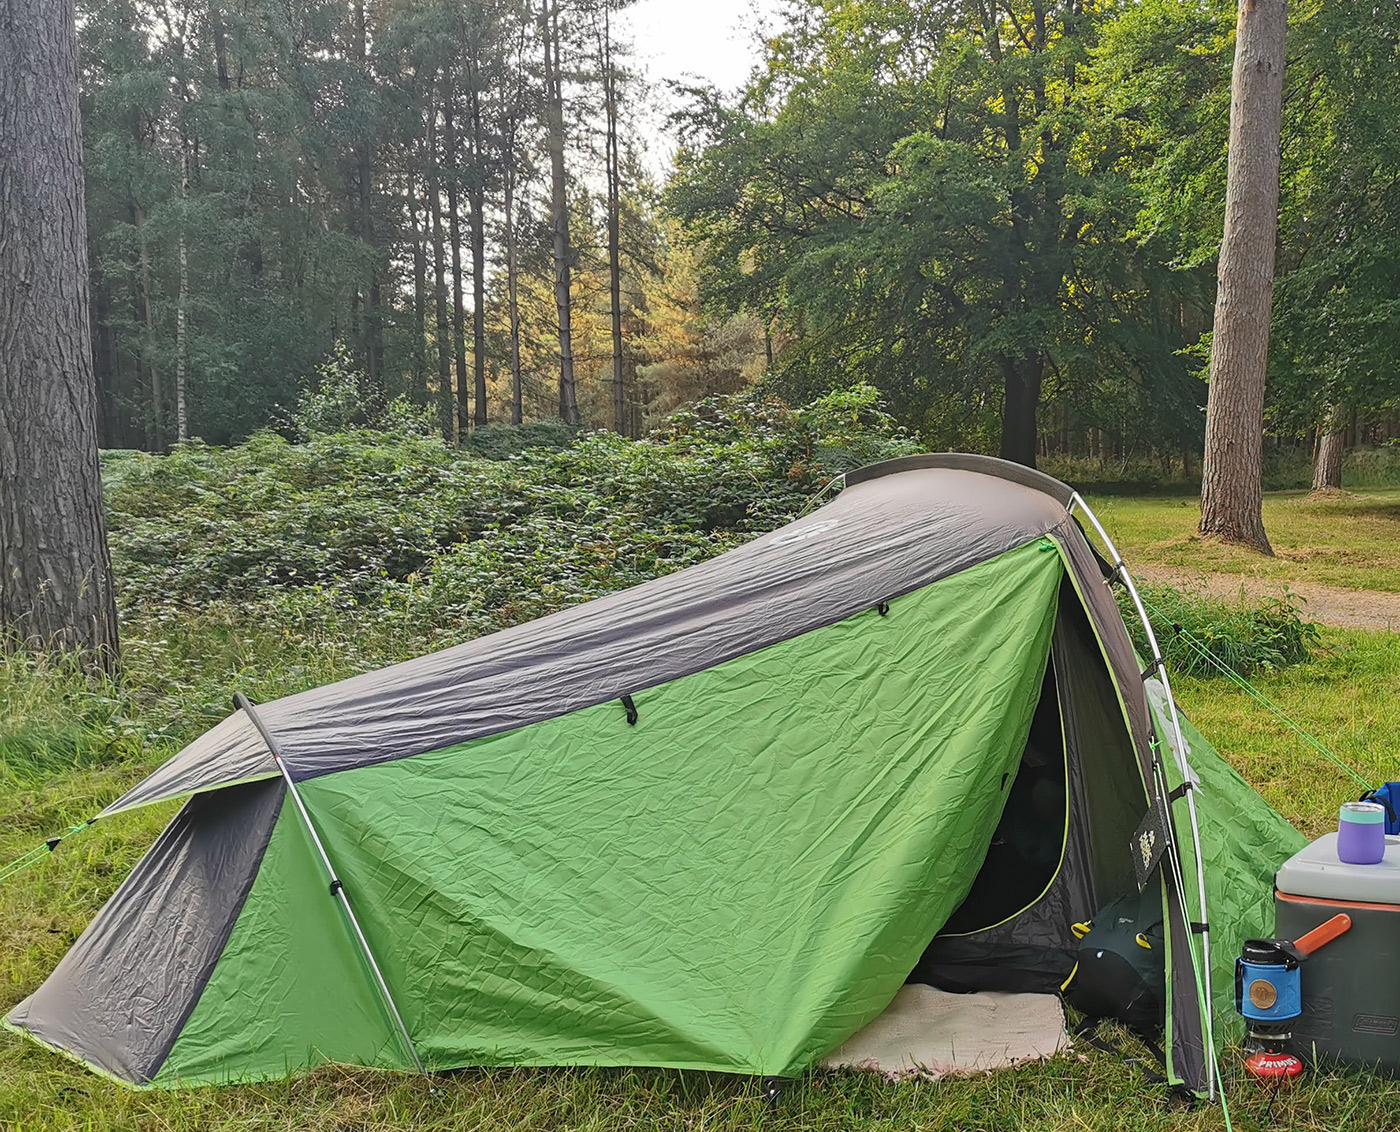 Tackeroo campsite